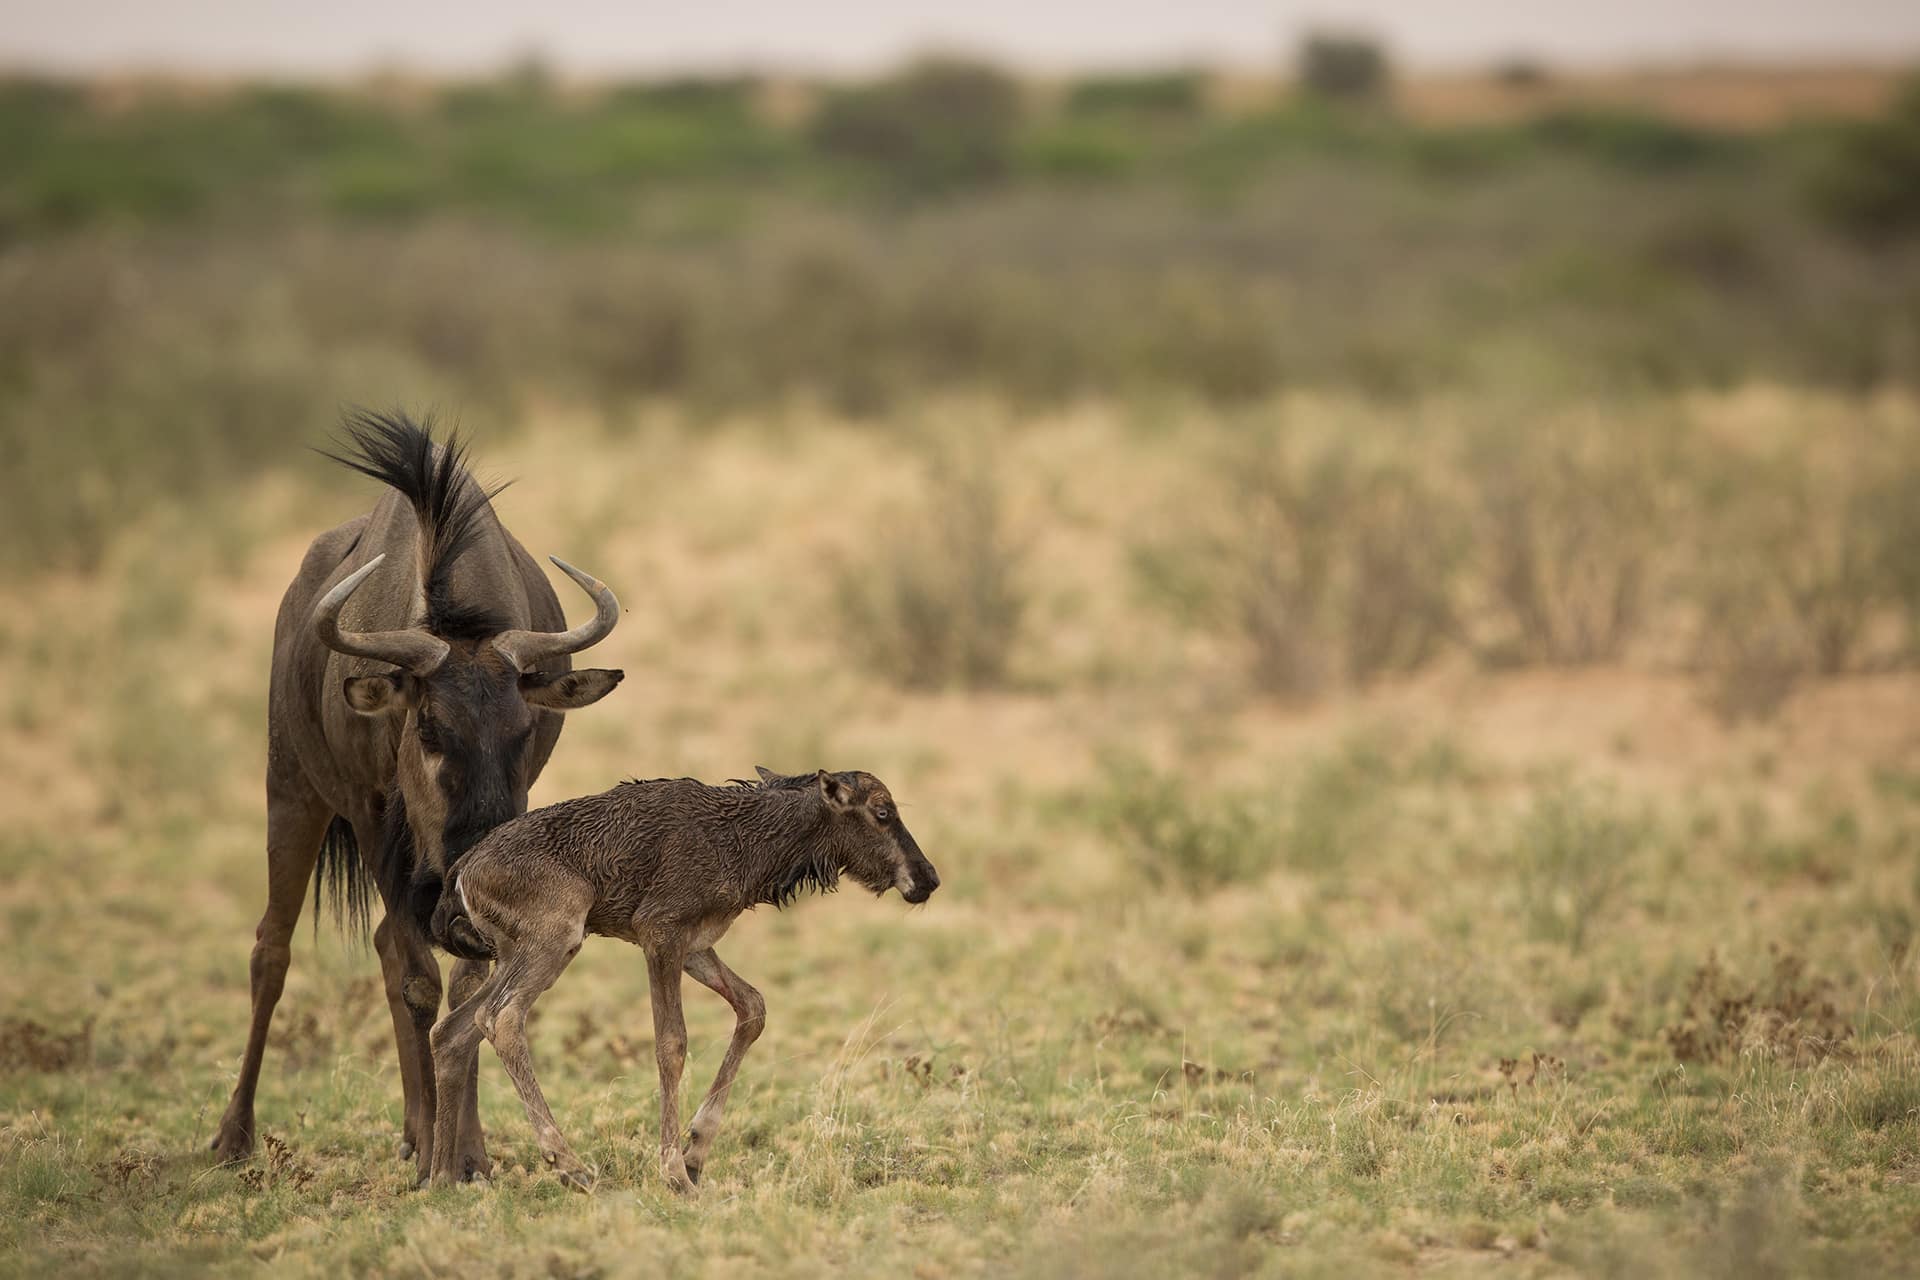 Wildebeest and Calf in the Serengeti